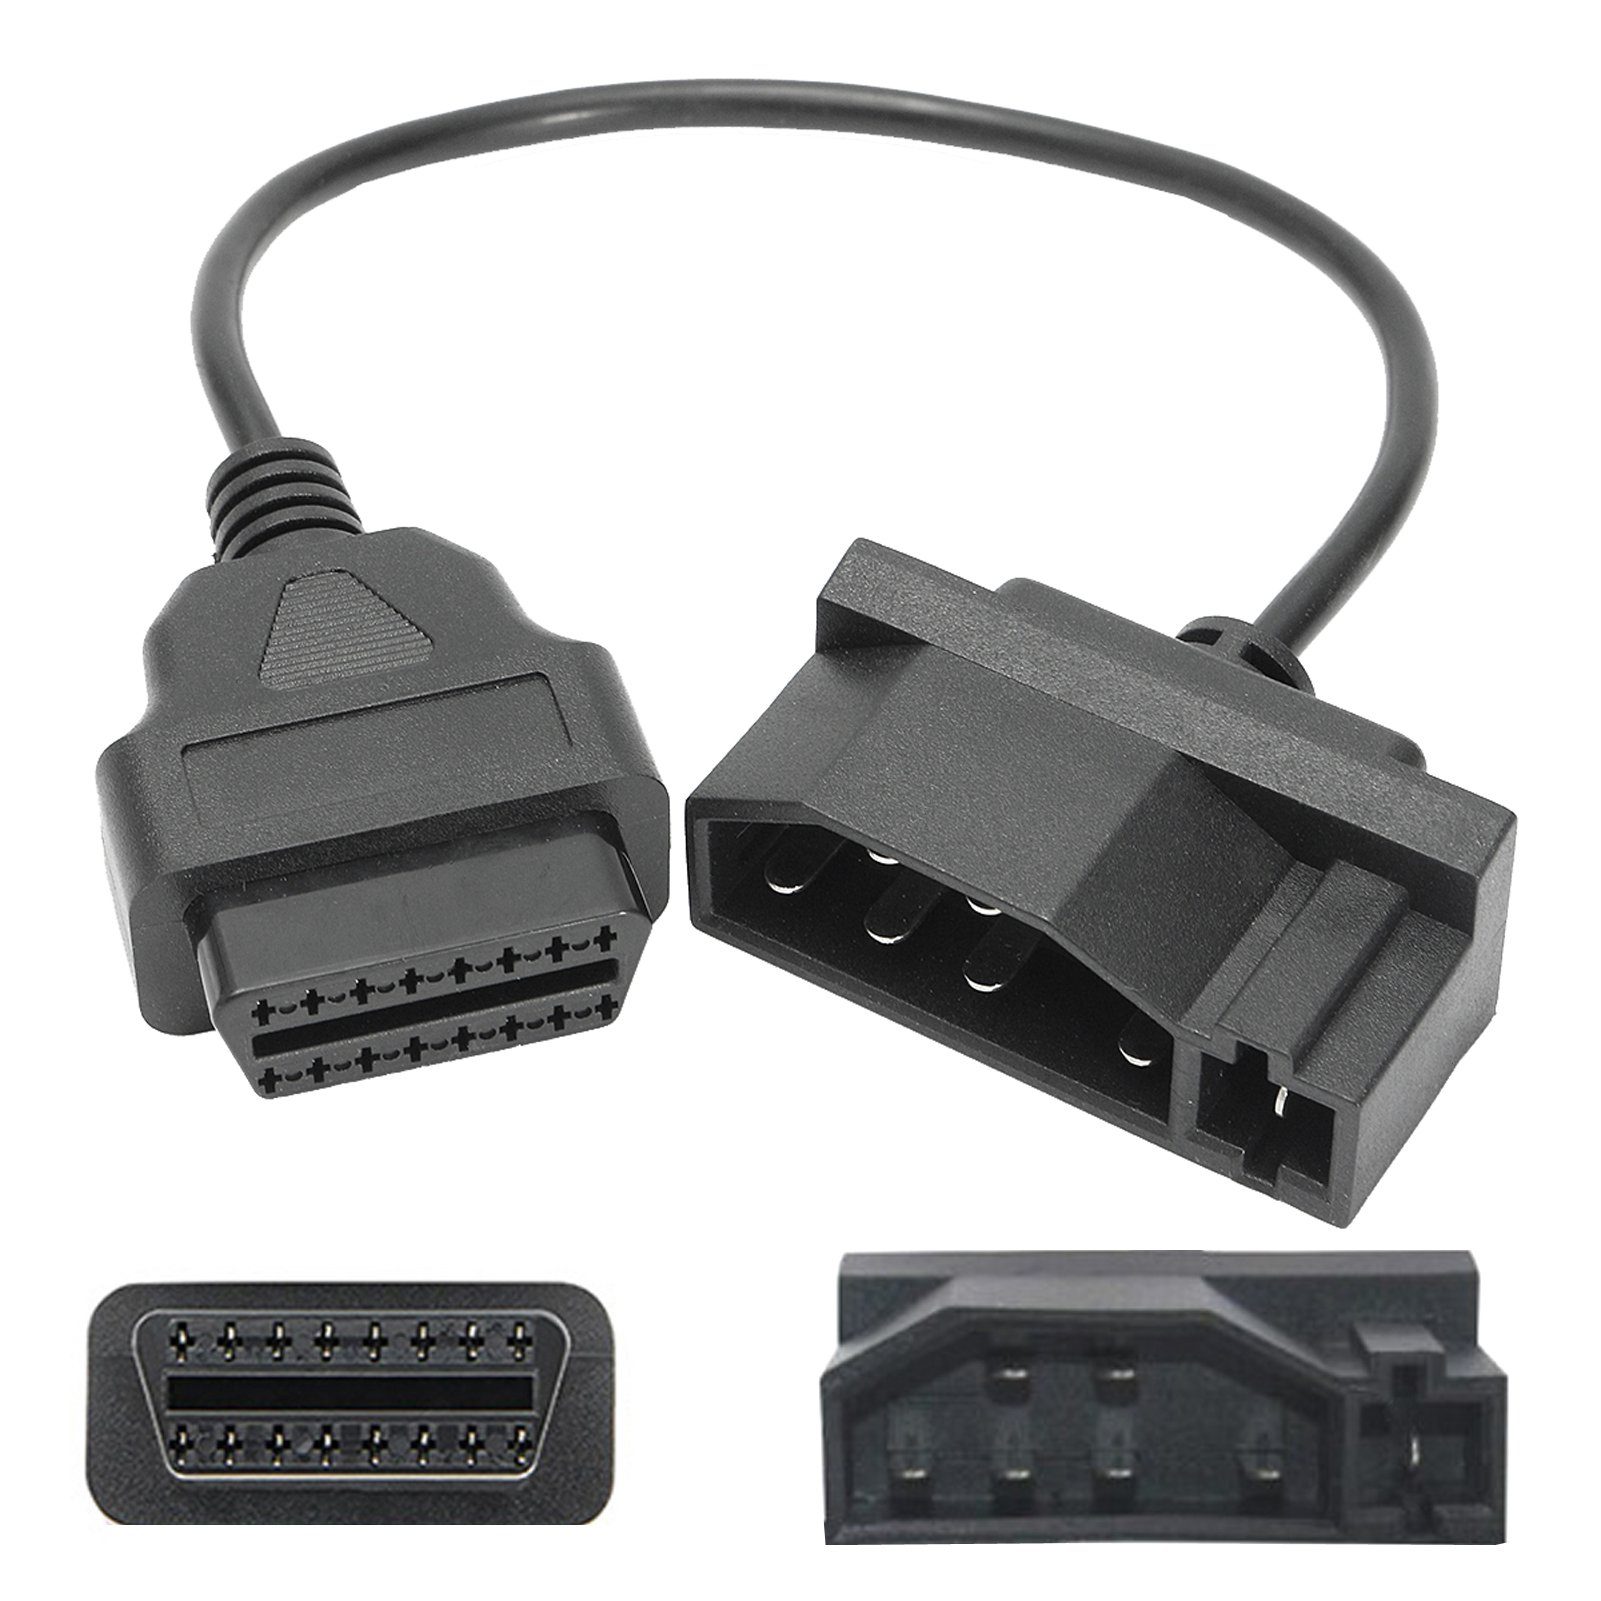 Bolwins F90C 40cm Kabel Adapter für Auto Ford 7-Pin OBD2 Diagnose Fehler lesen Elektro-Kabel